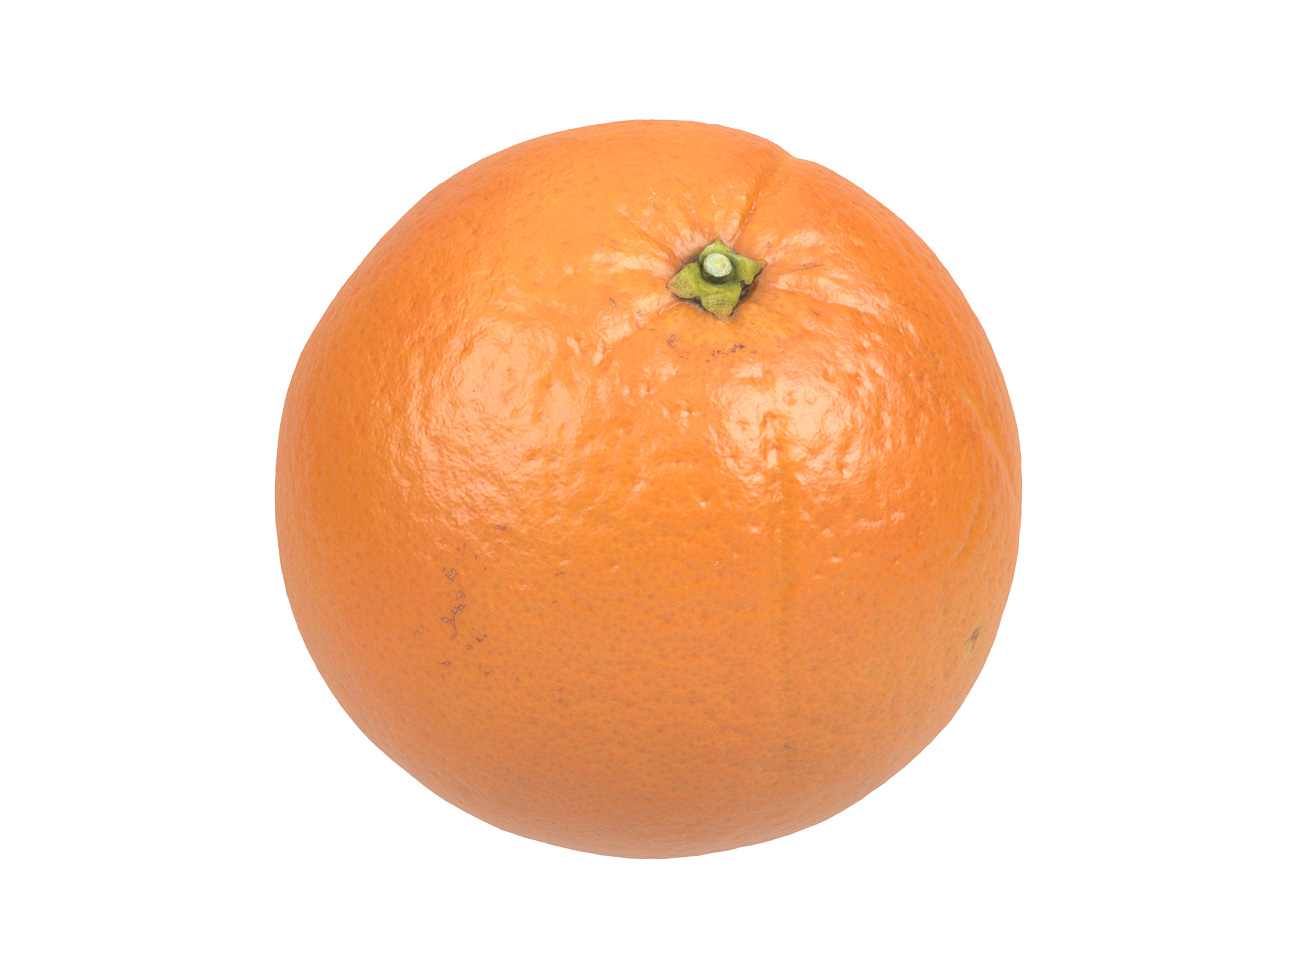  Orange  1 creative crops